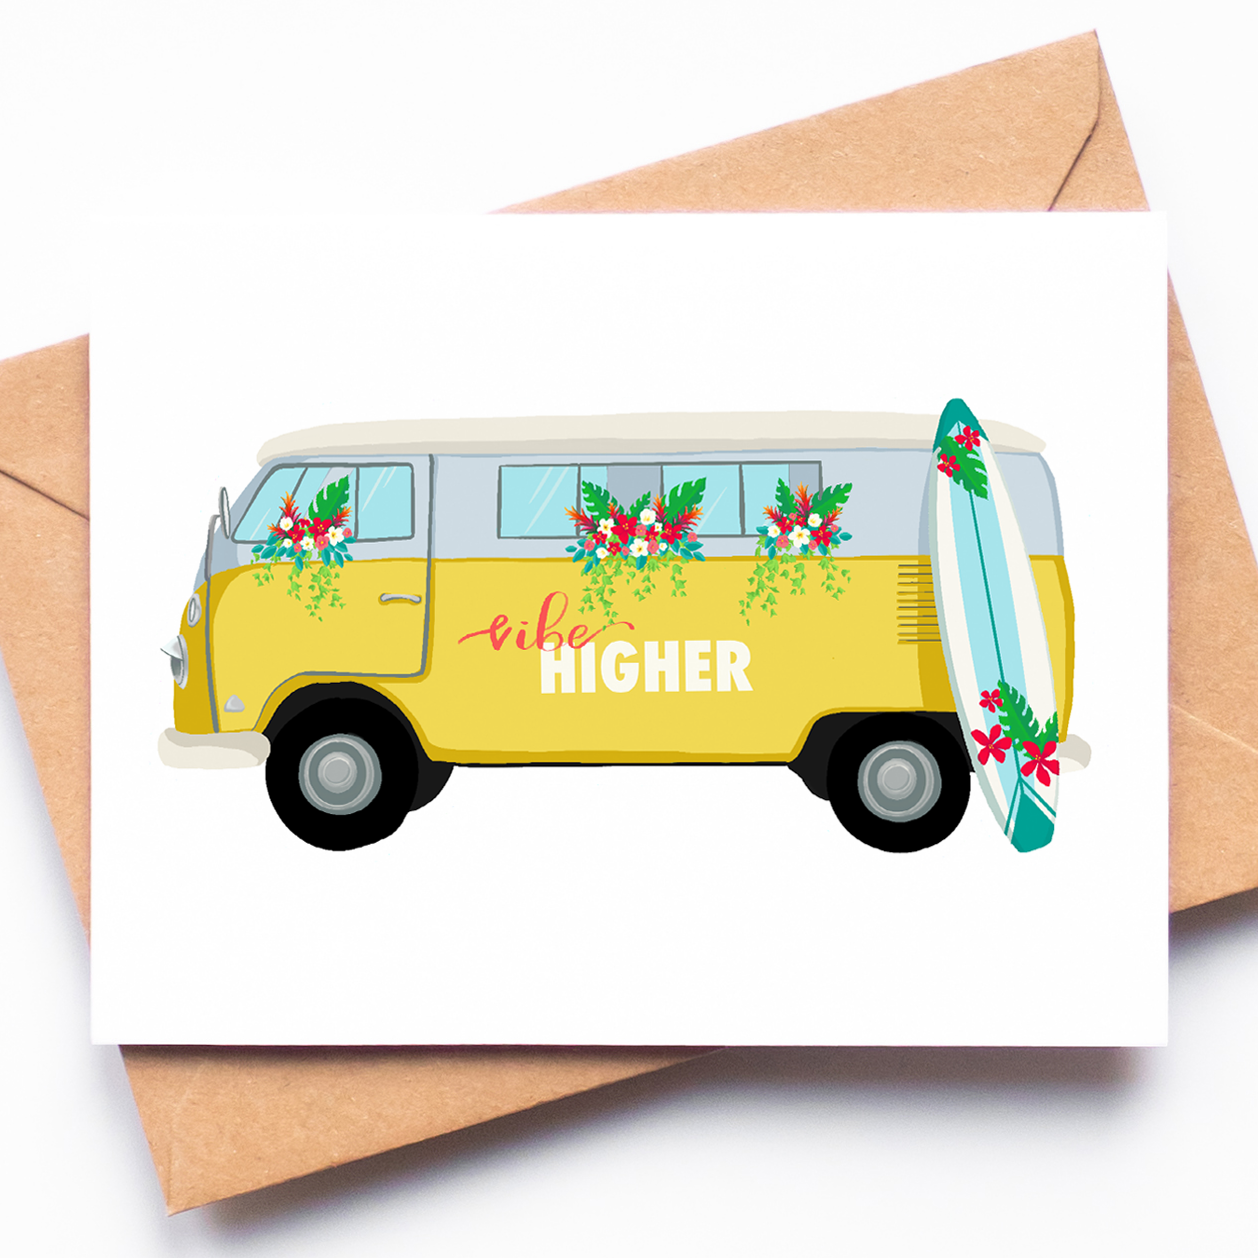 "Vibe Higher" - Greeting Card